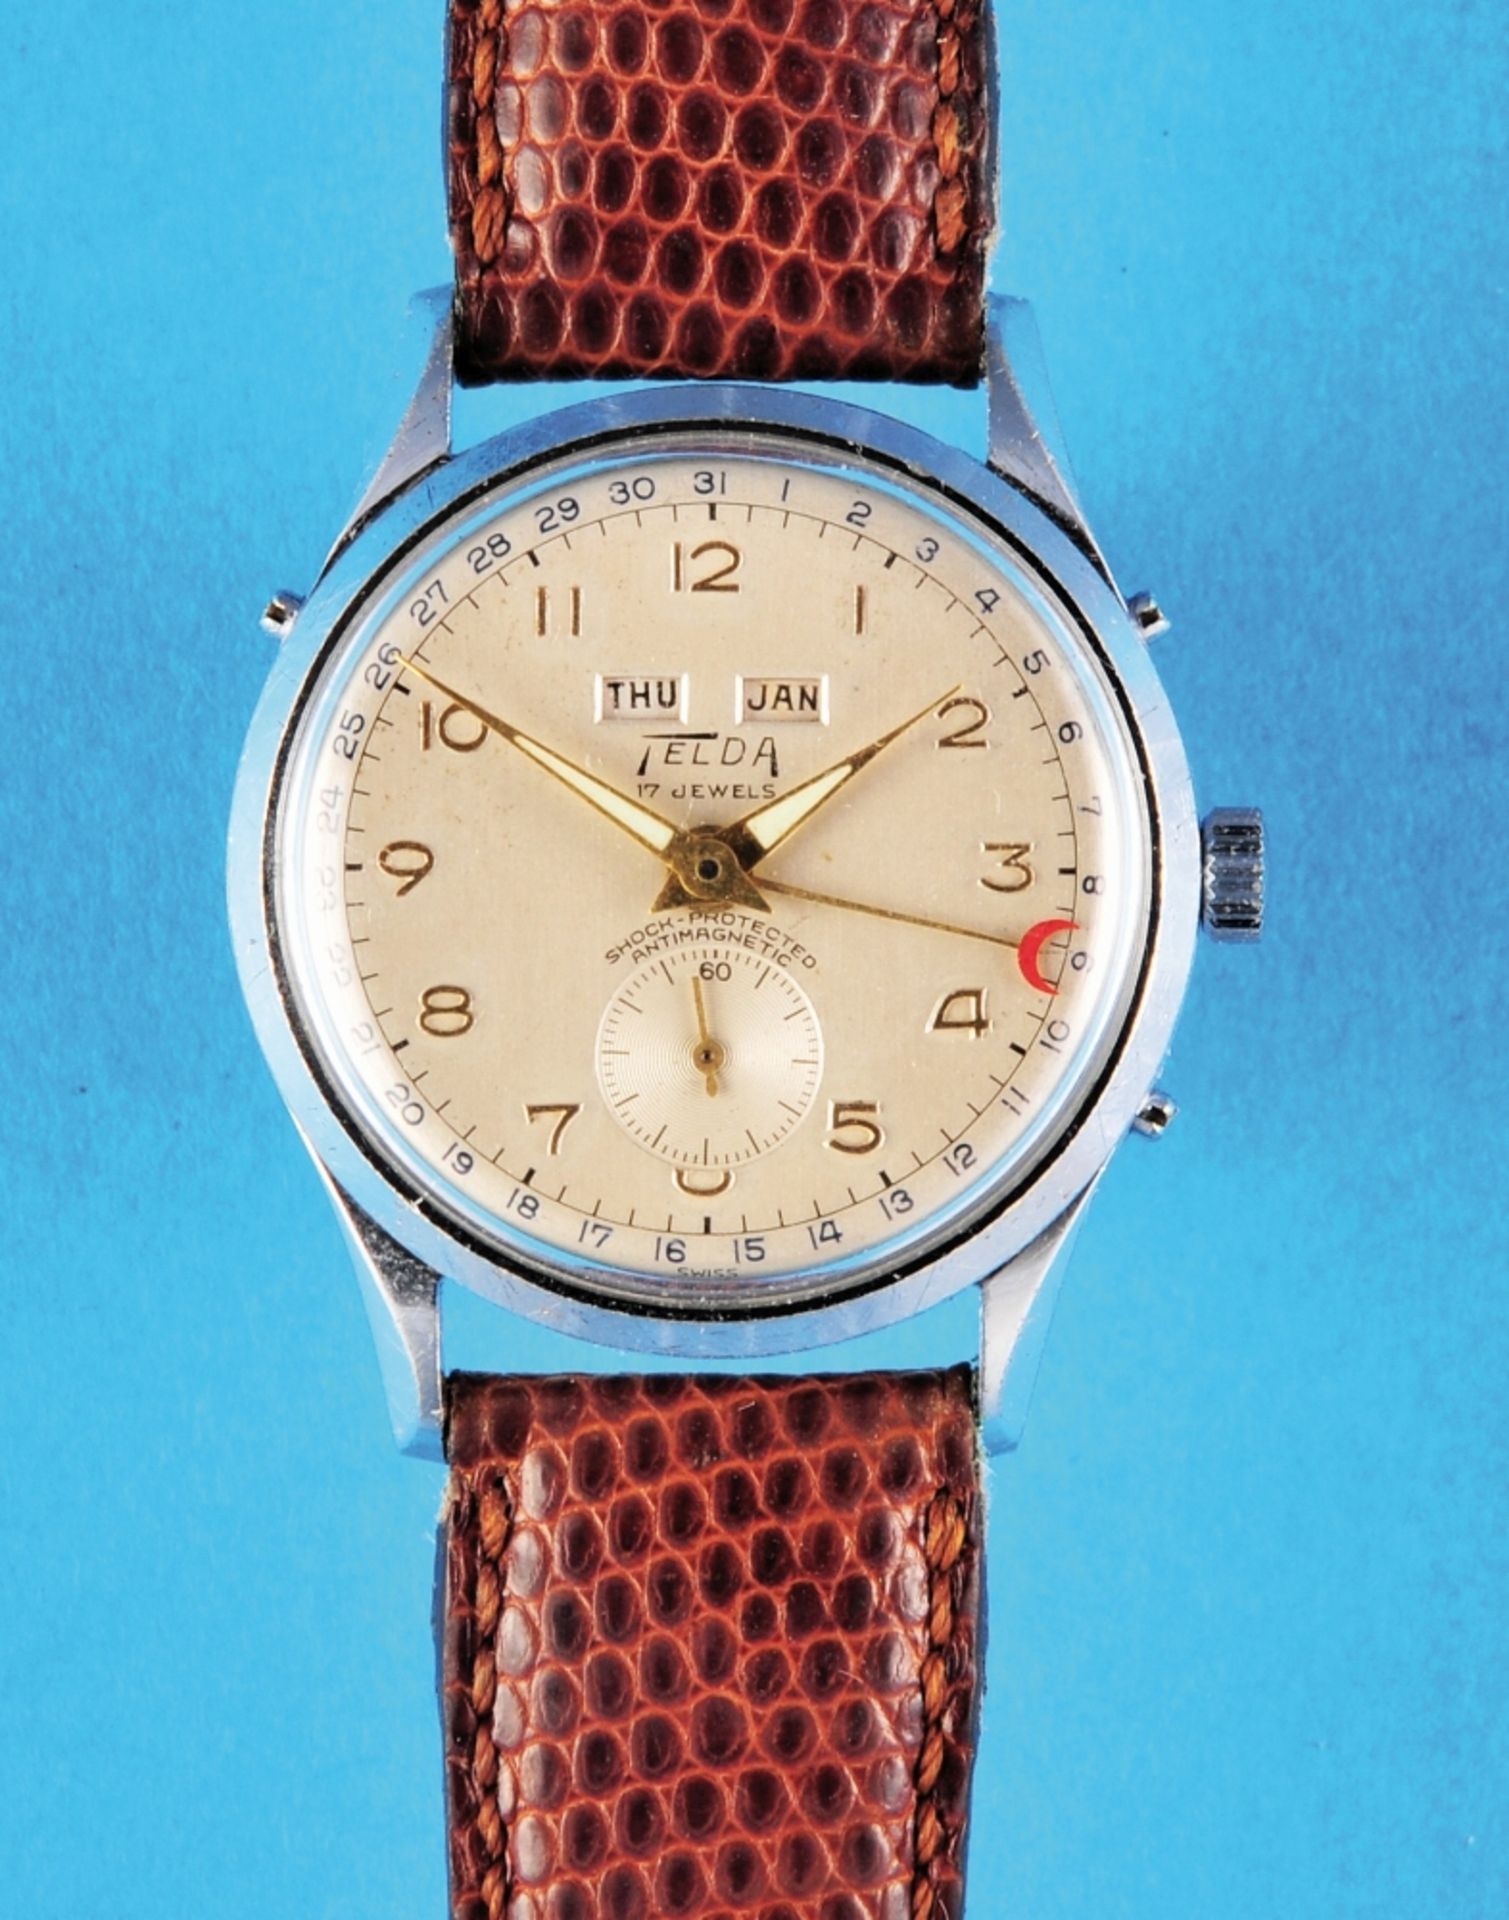 Telda Antimagnetic Wristwatch with calendar